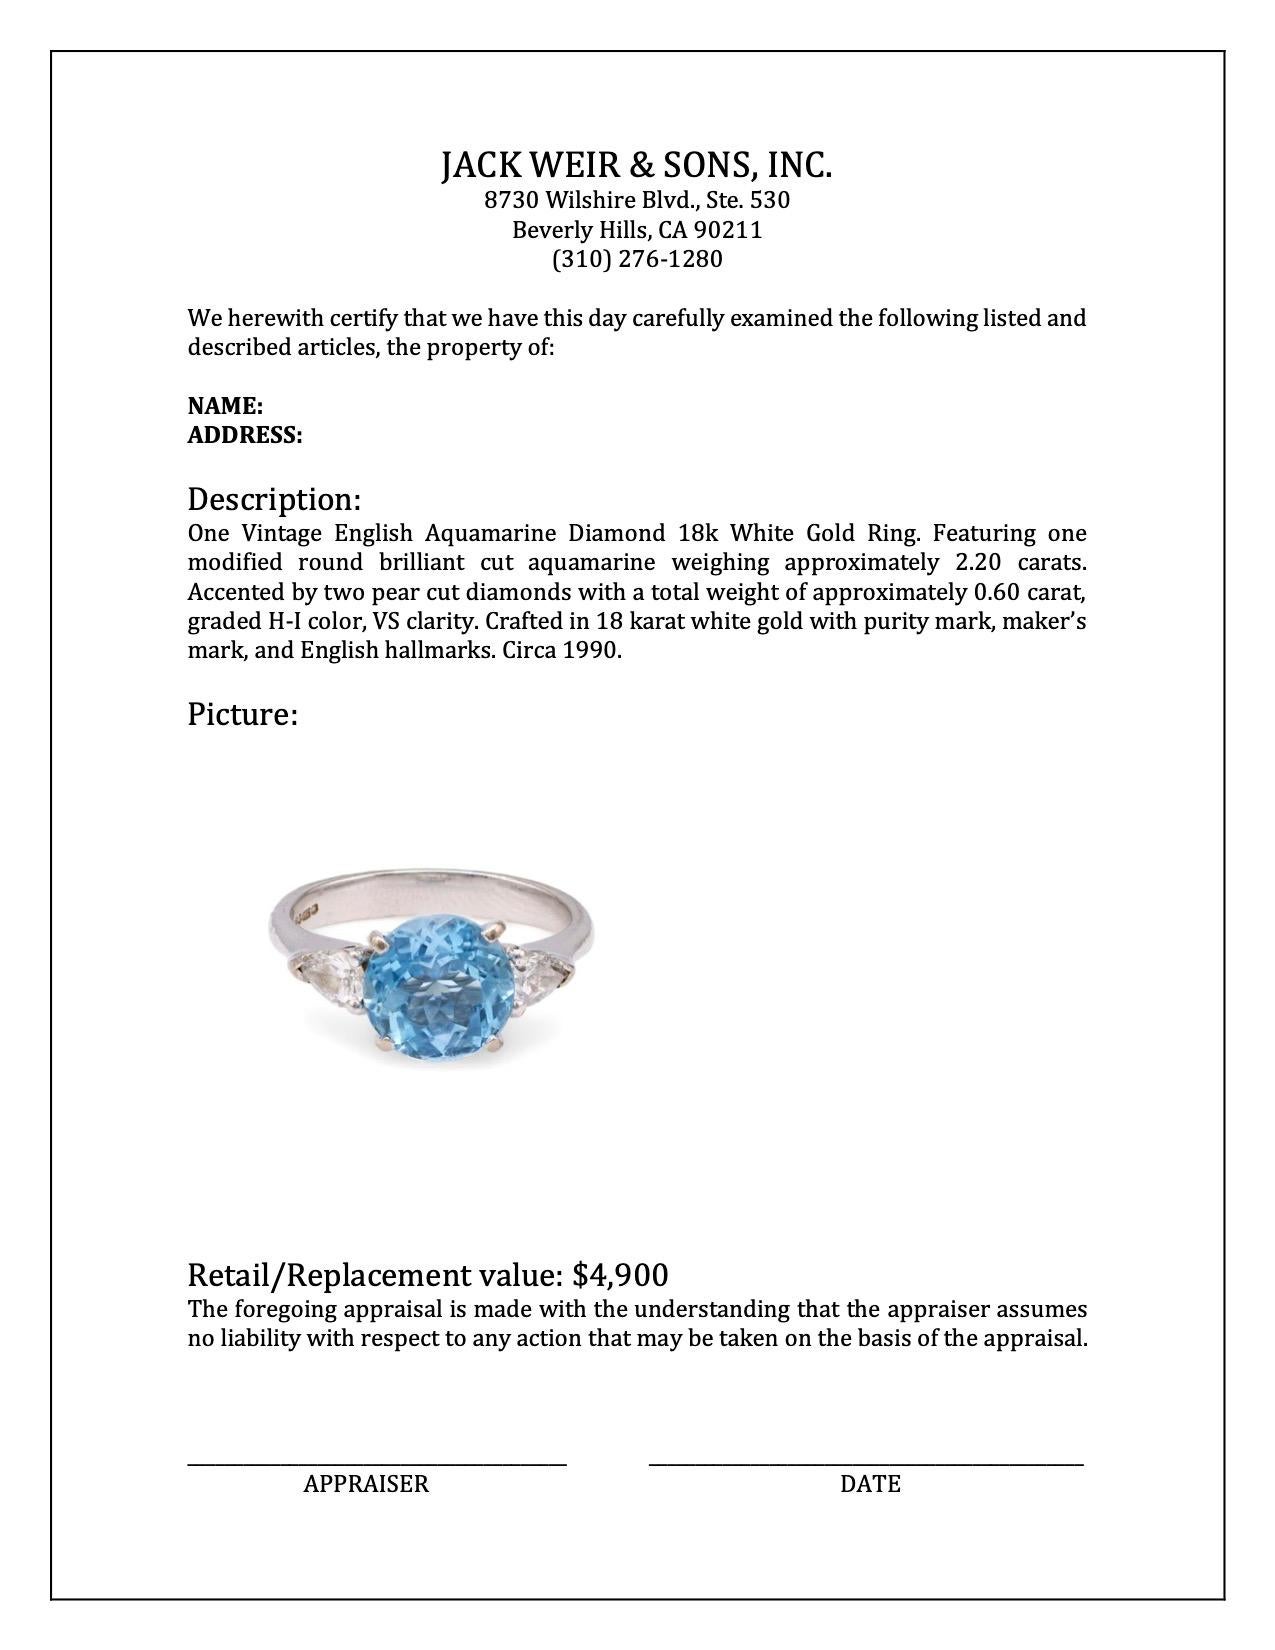 Women's or Men's Vintage English Aquamarine Diamond 18k White Gold Ring For Sale